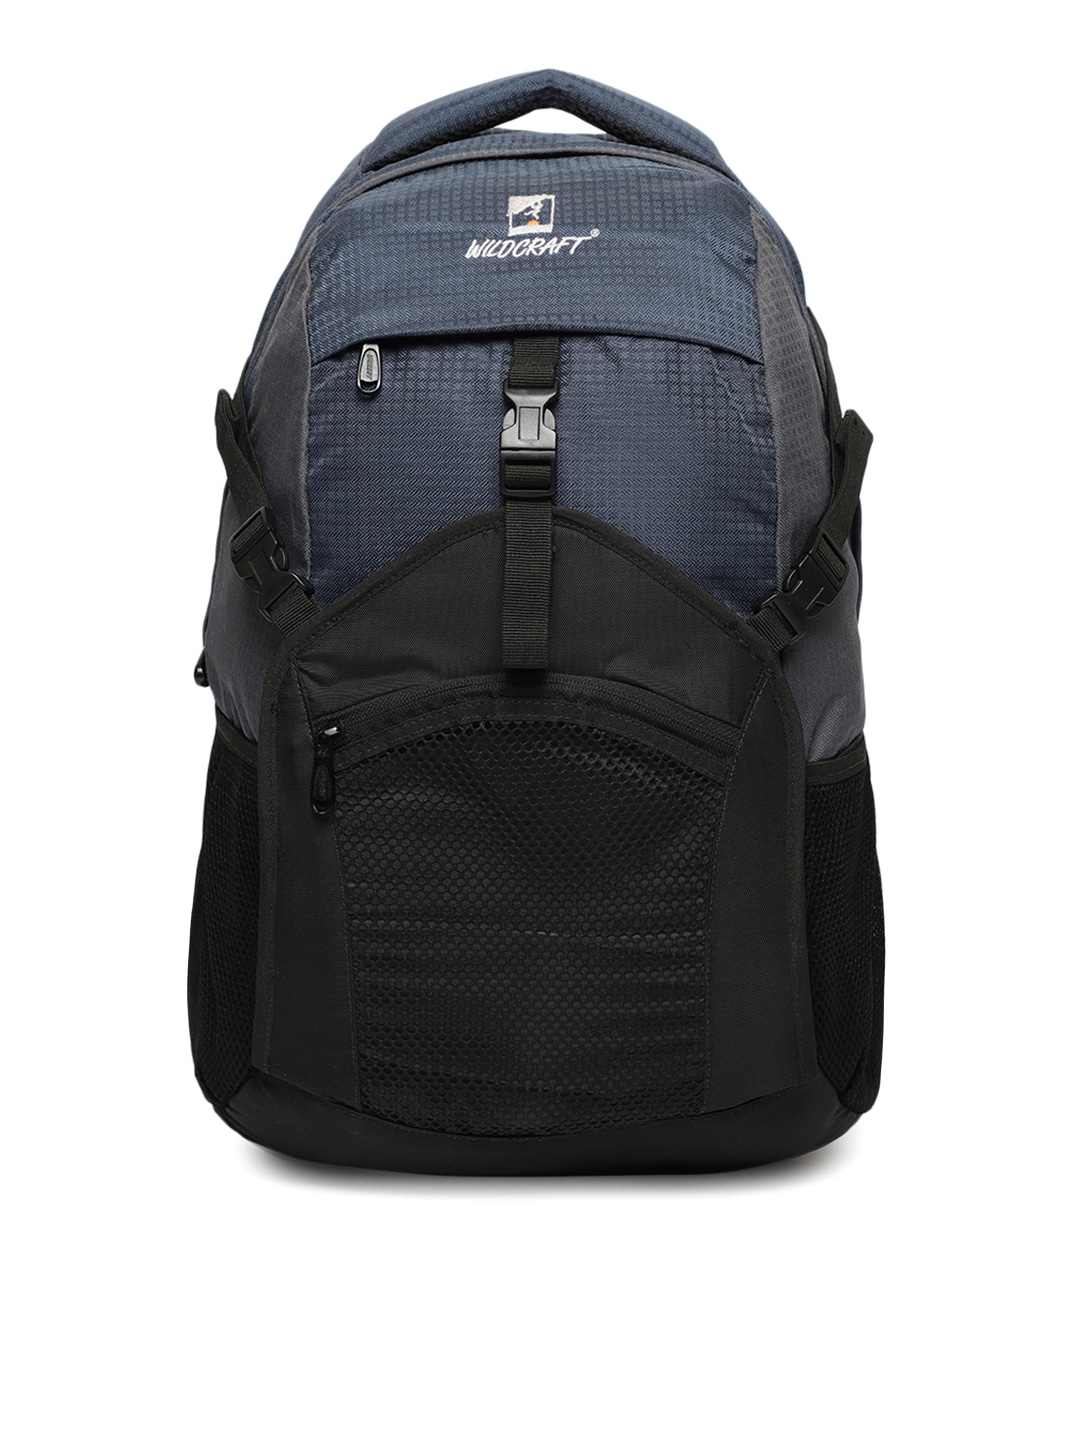 Wildcraft Unisex Blue & Black Solid Backpack